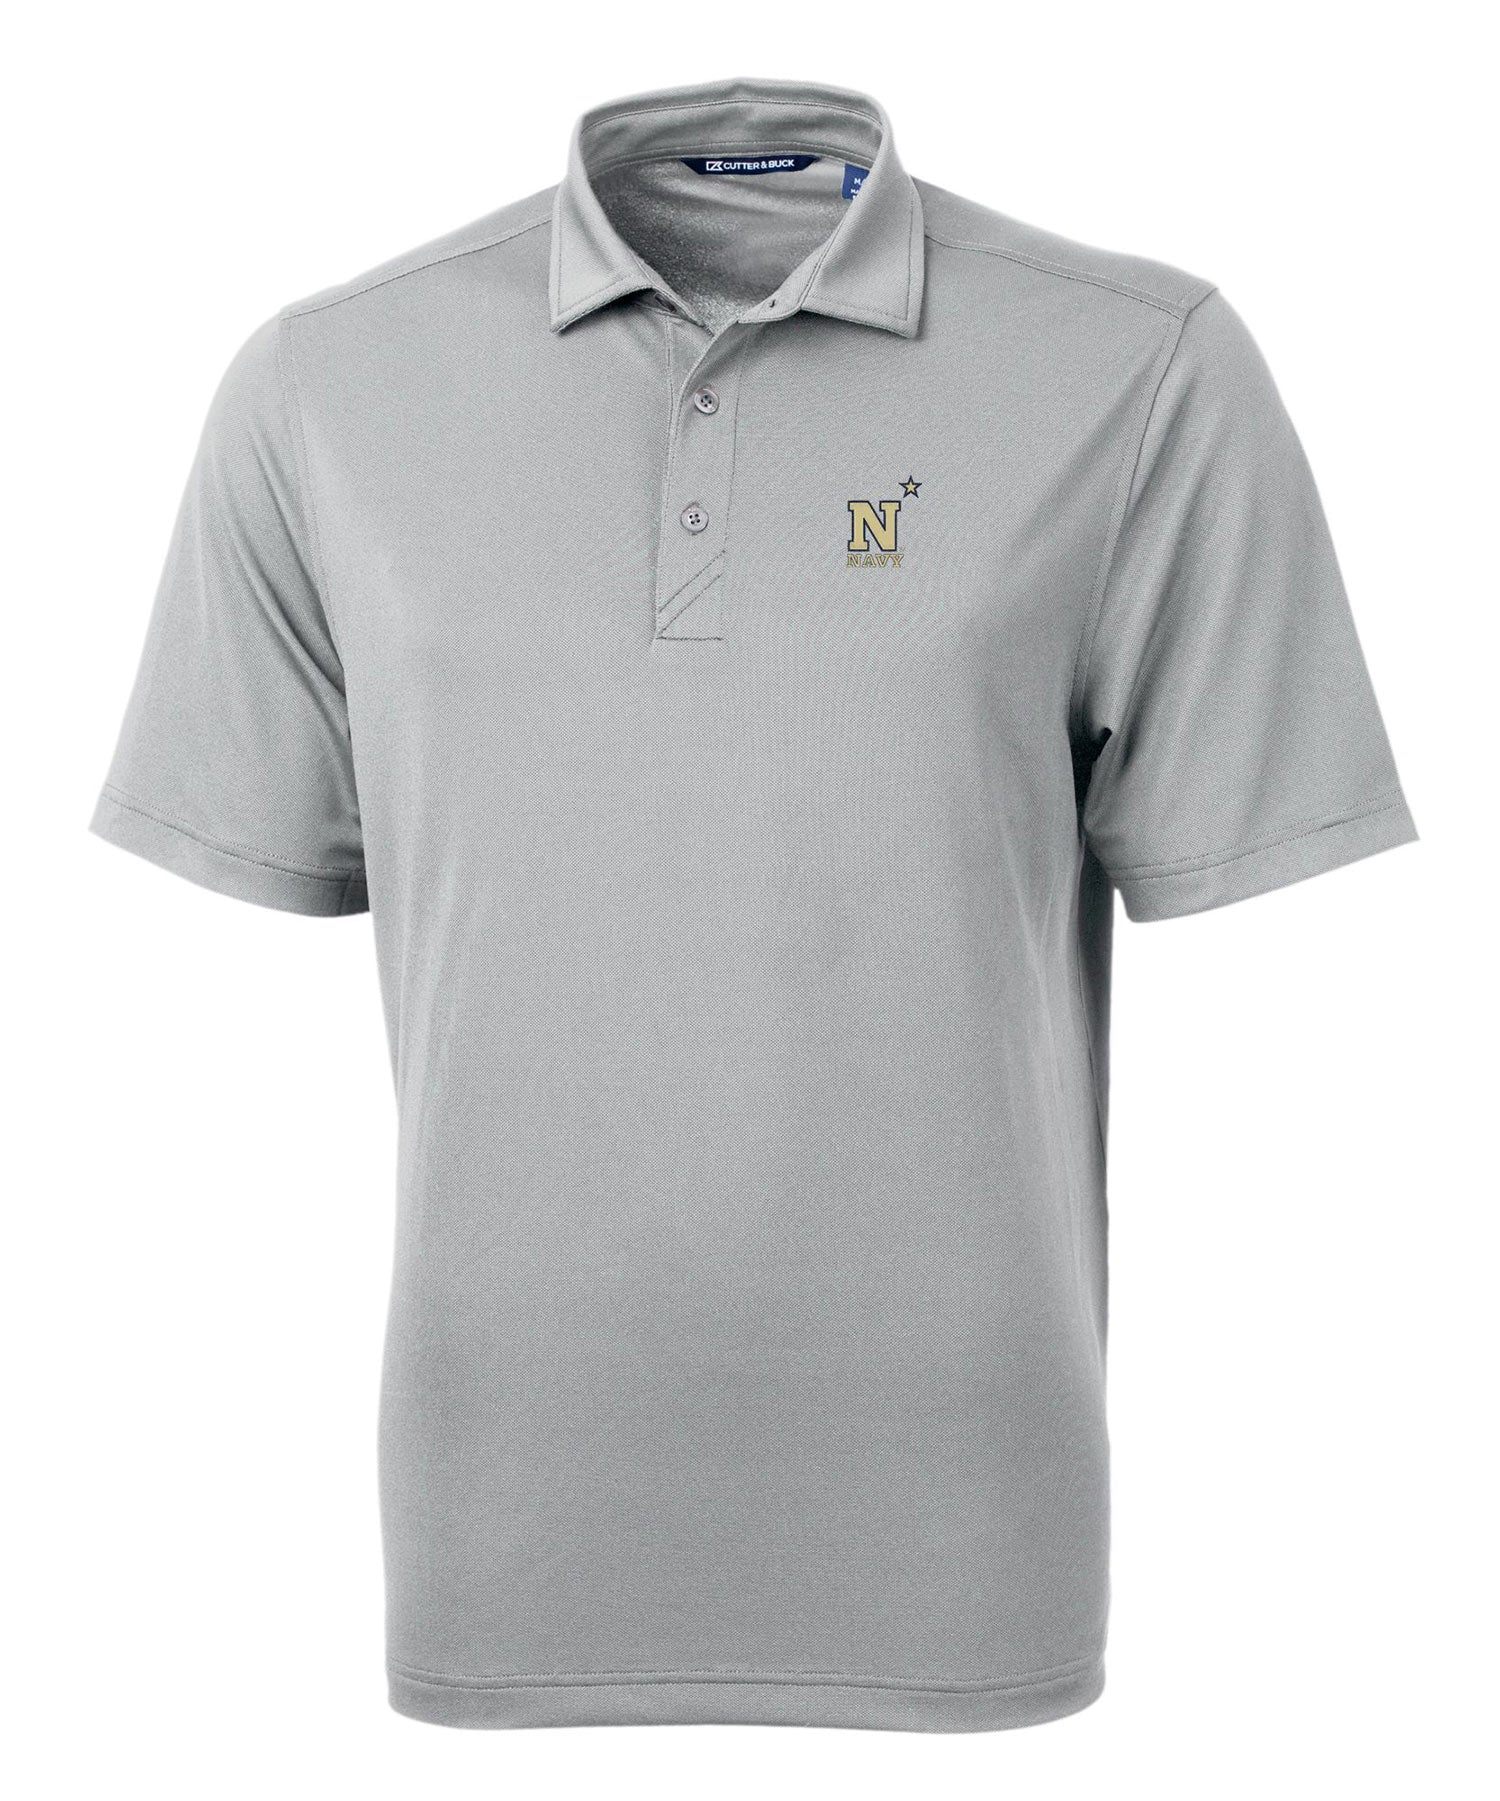 Cutter & Buck United States Naval Academy Midshipmen Short Sleeve Polo Knit Shirt, Men's Big & Tall